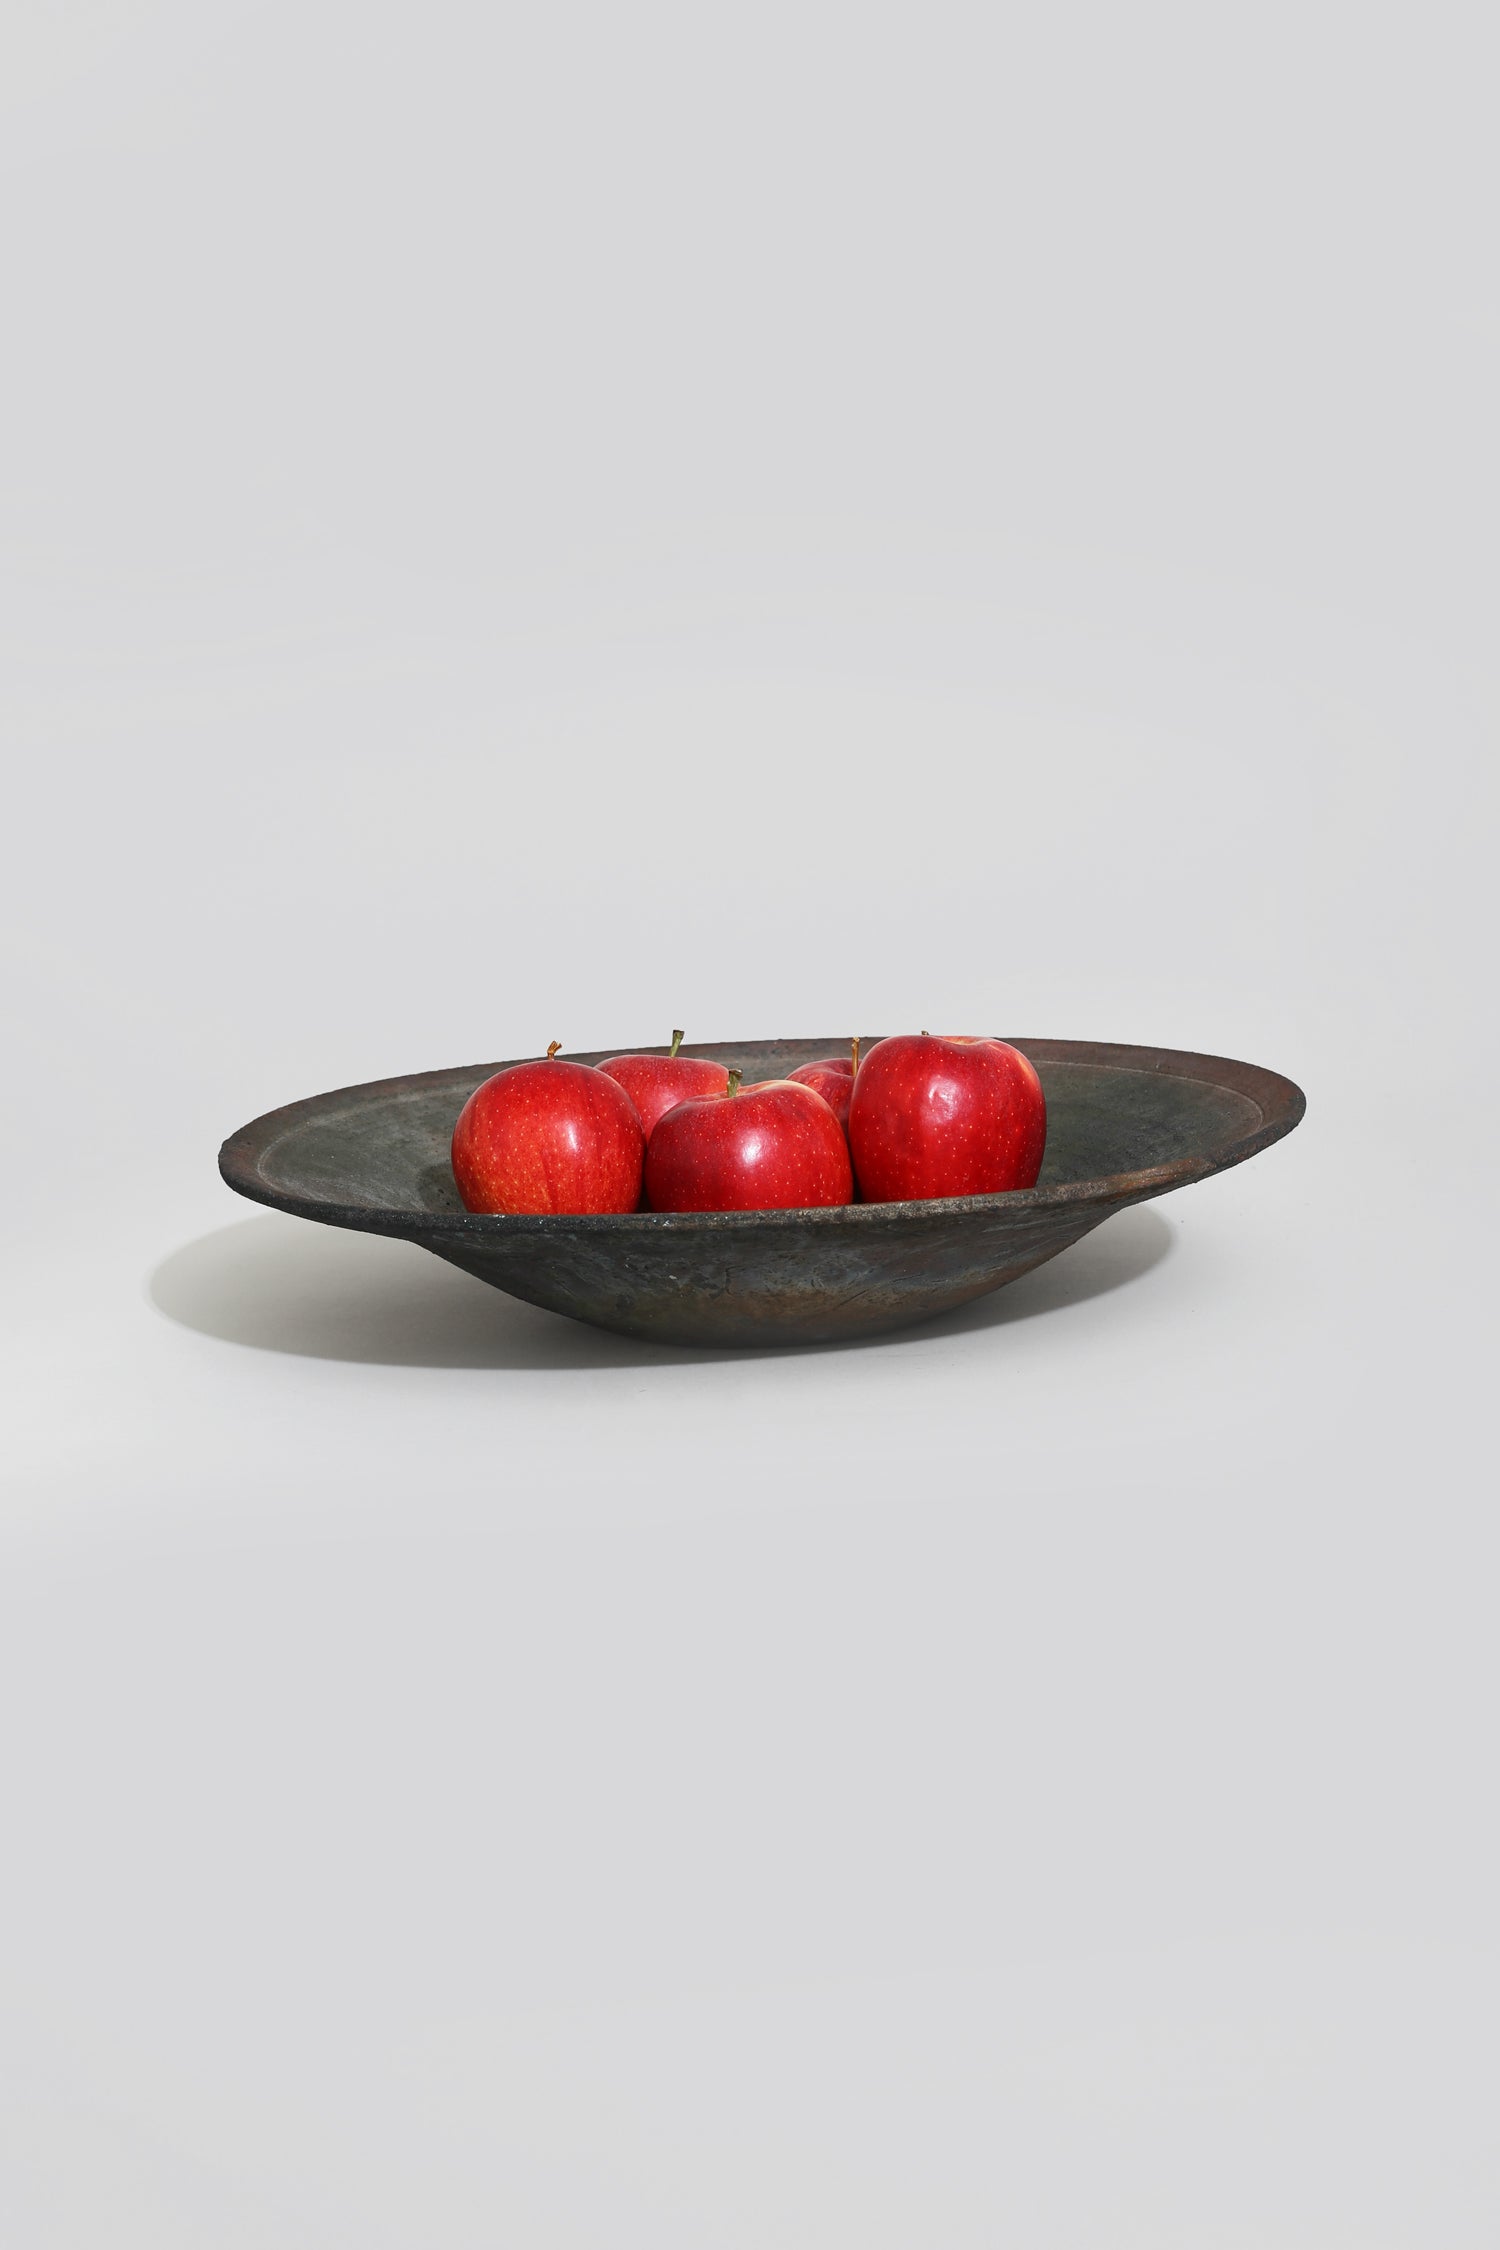 Textural Artisan Pottery Bowl